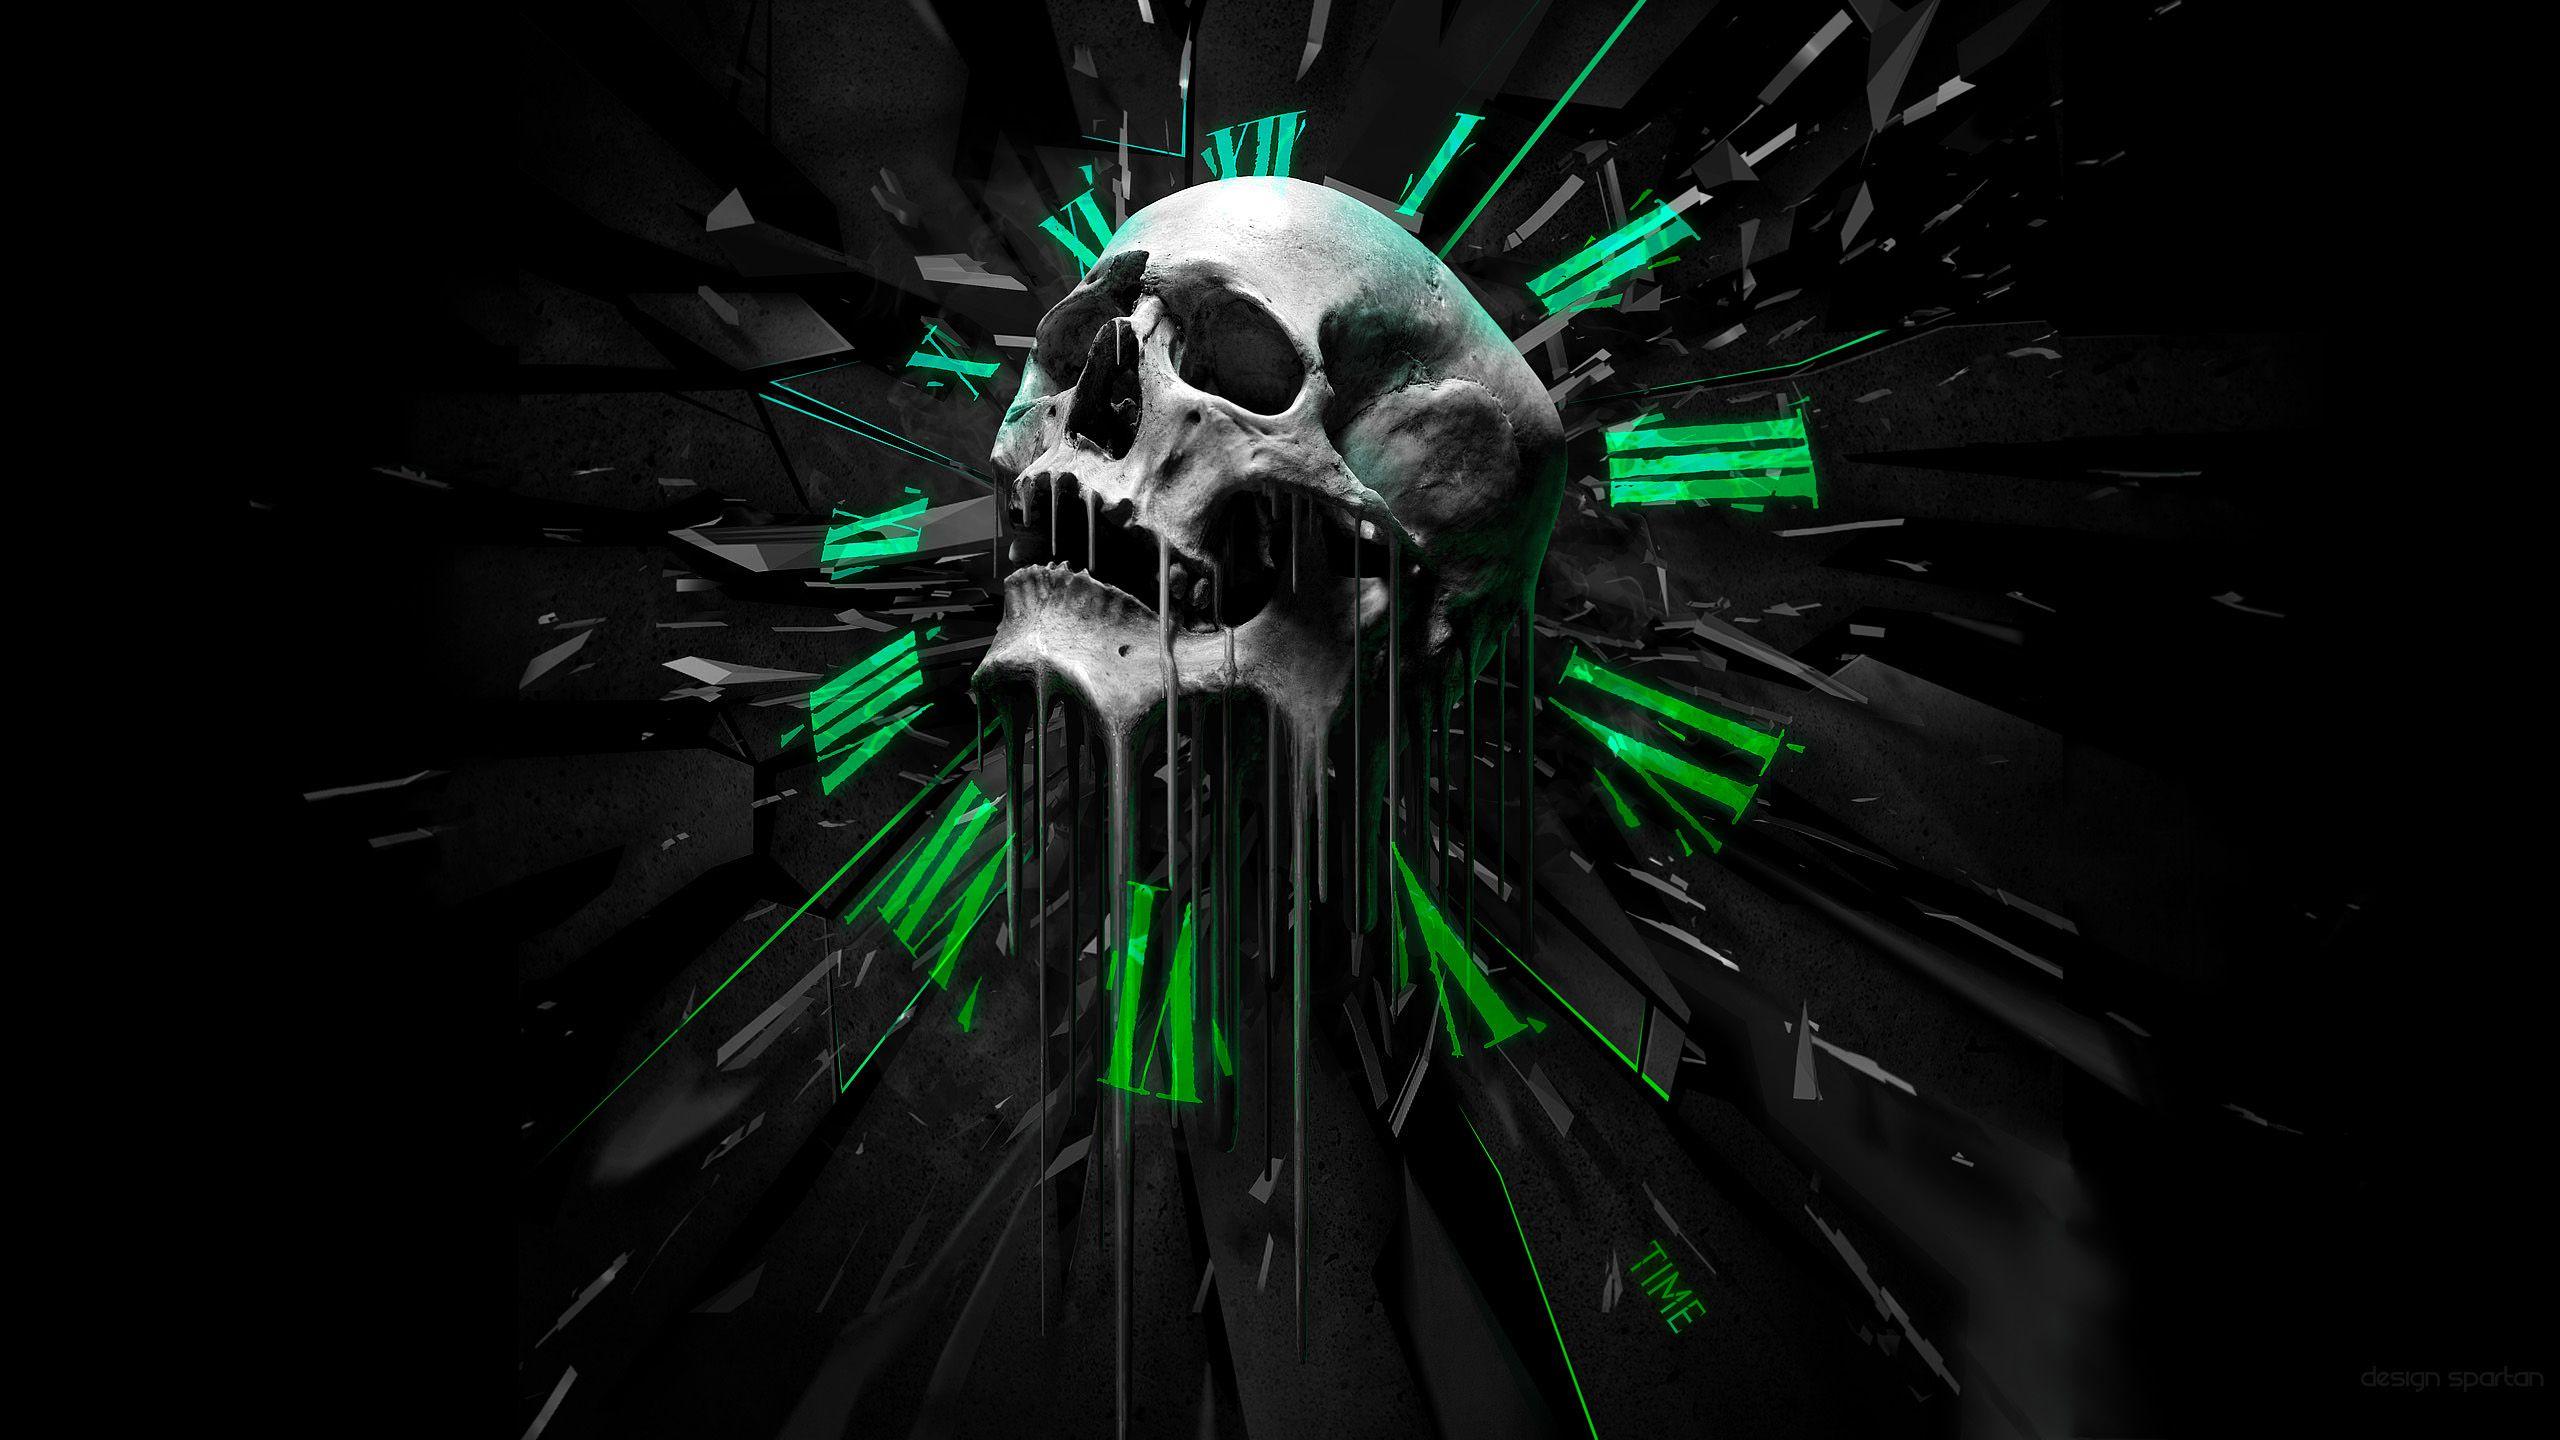 Abstract Skull Clock, HD Artist, 4k Wallpaper, Image, Background